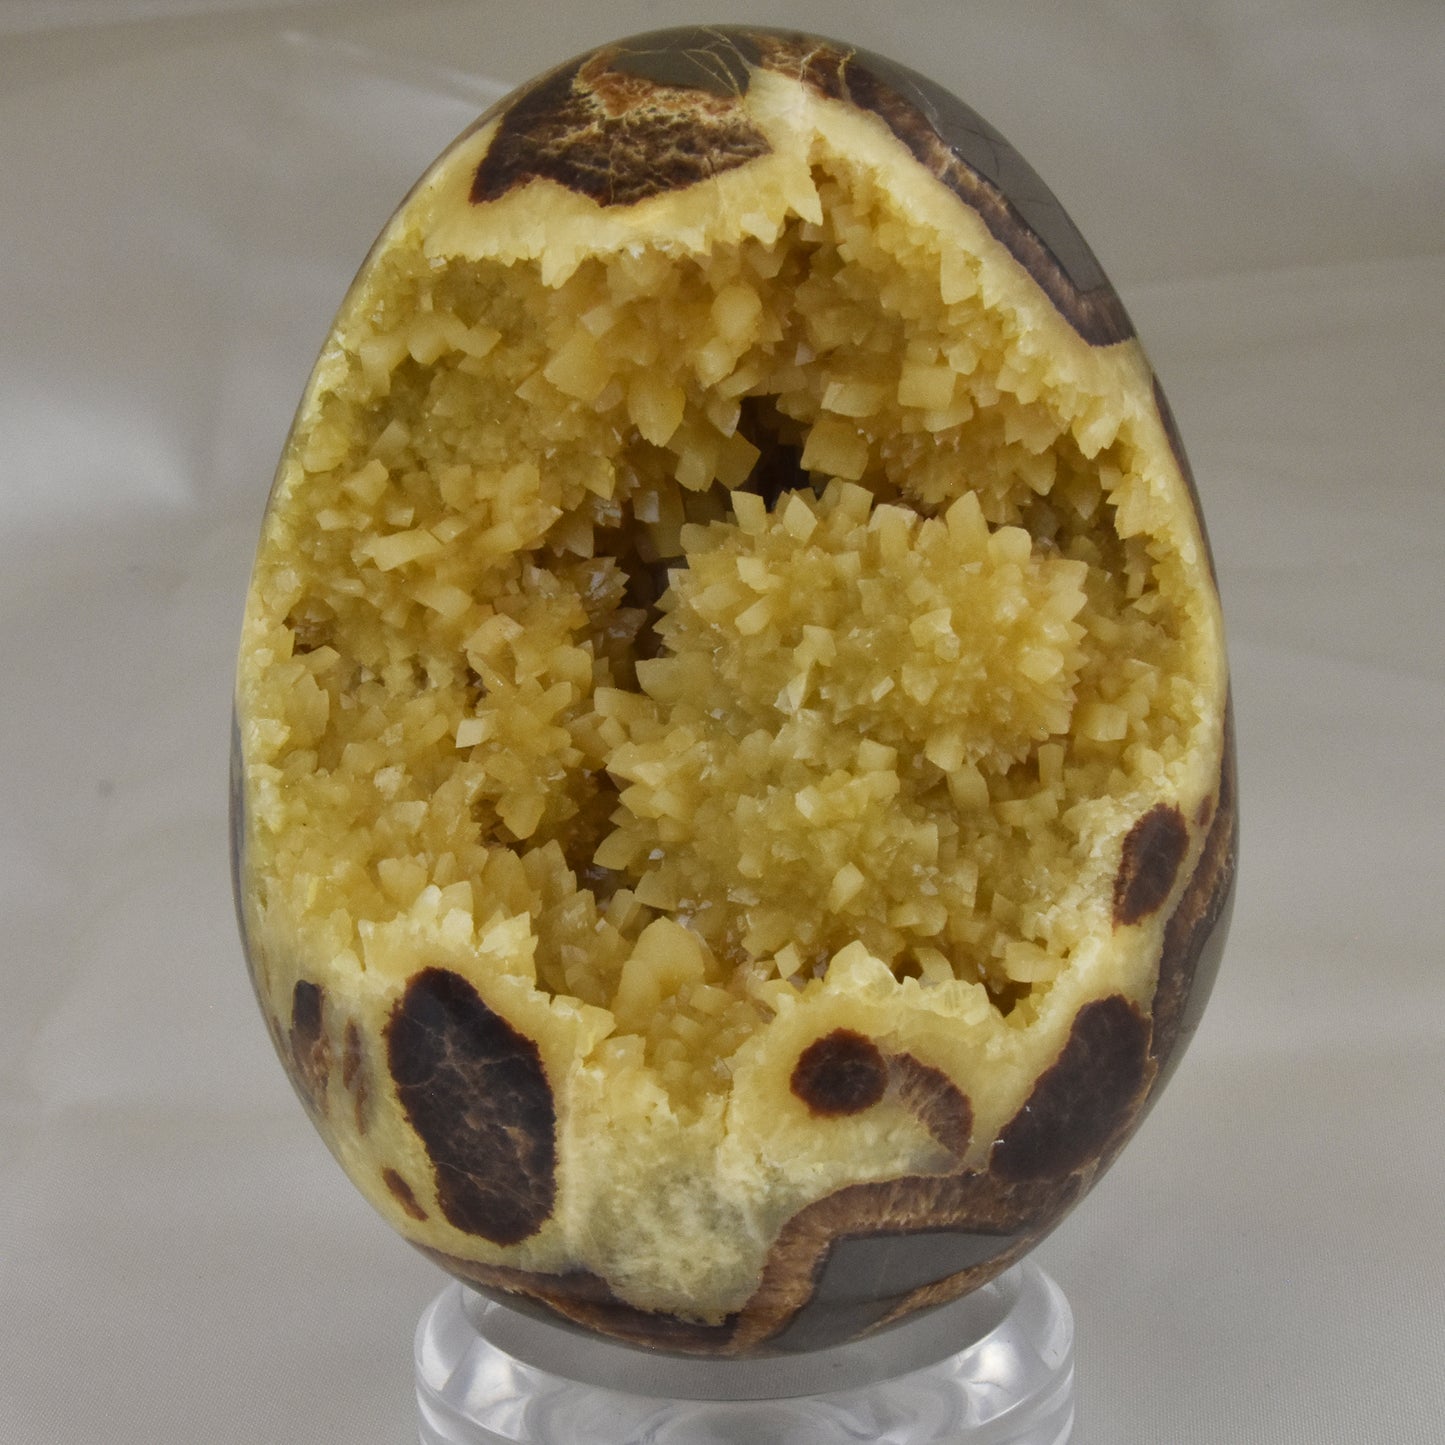 Septarian Nodule Geode Egg